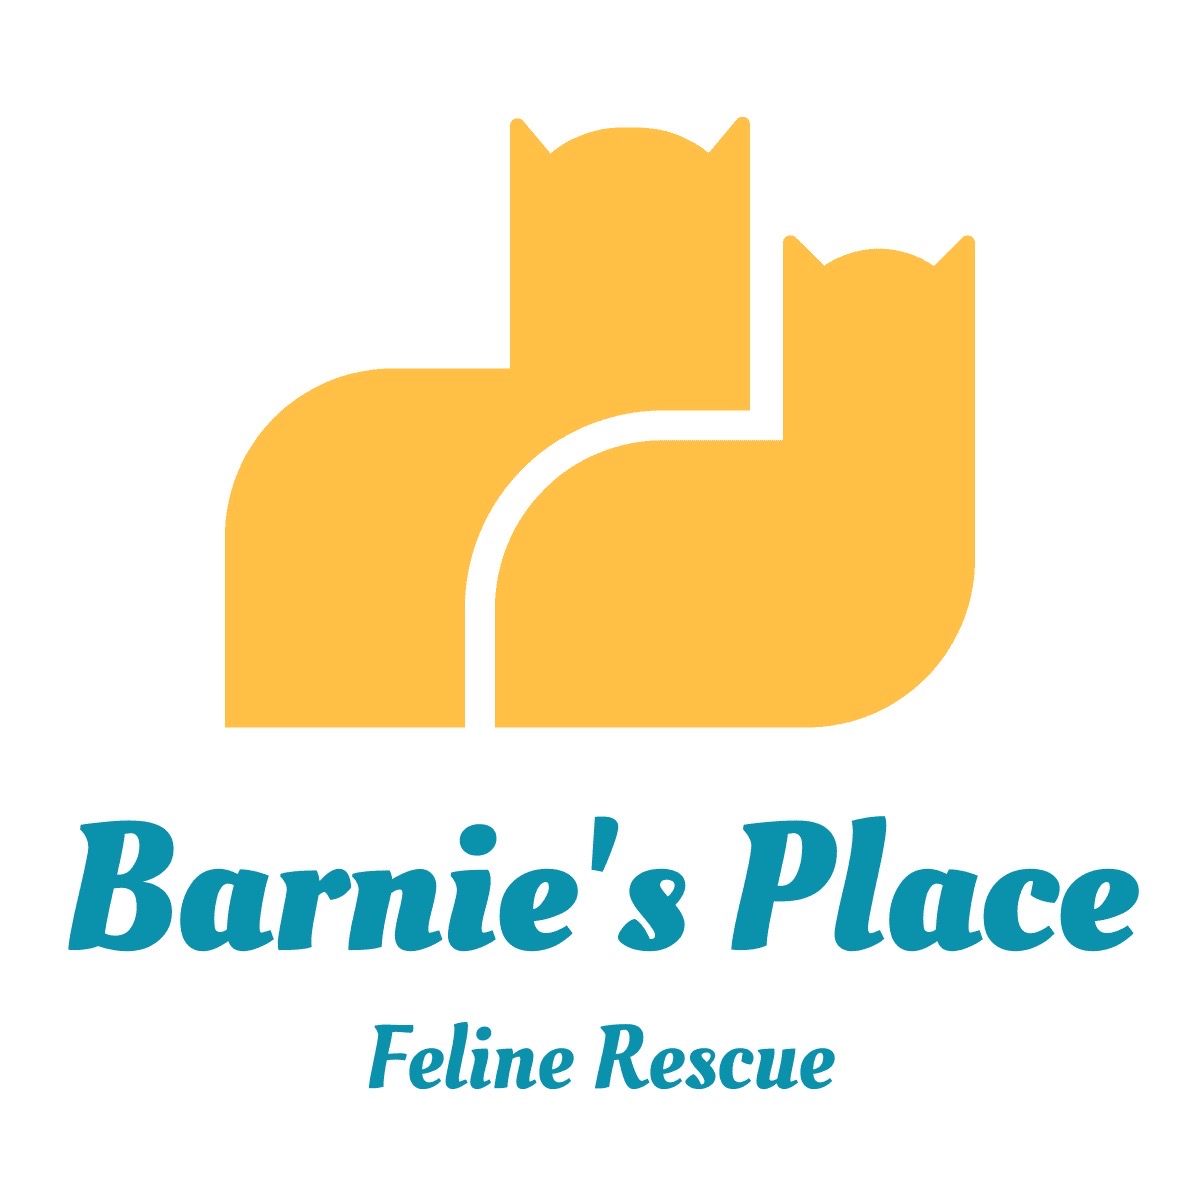 Barnie's Place Feline Rescue